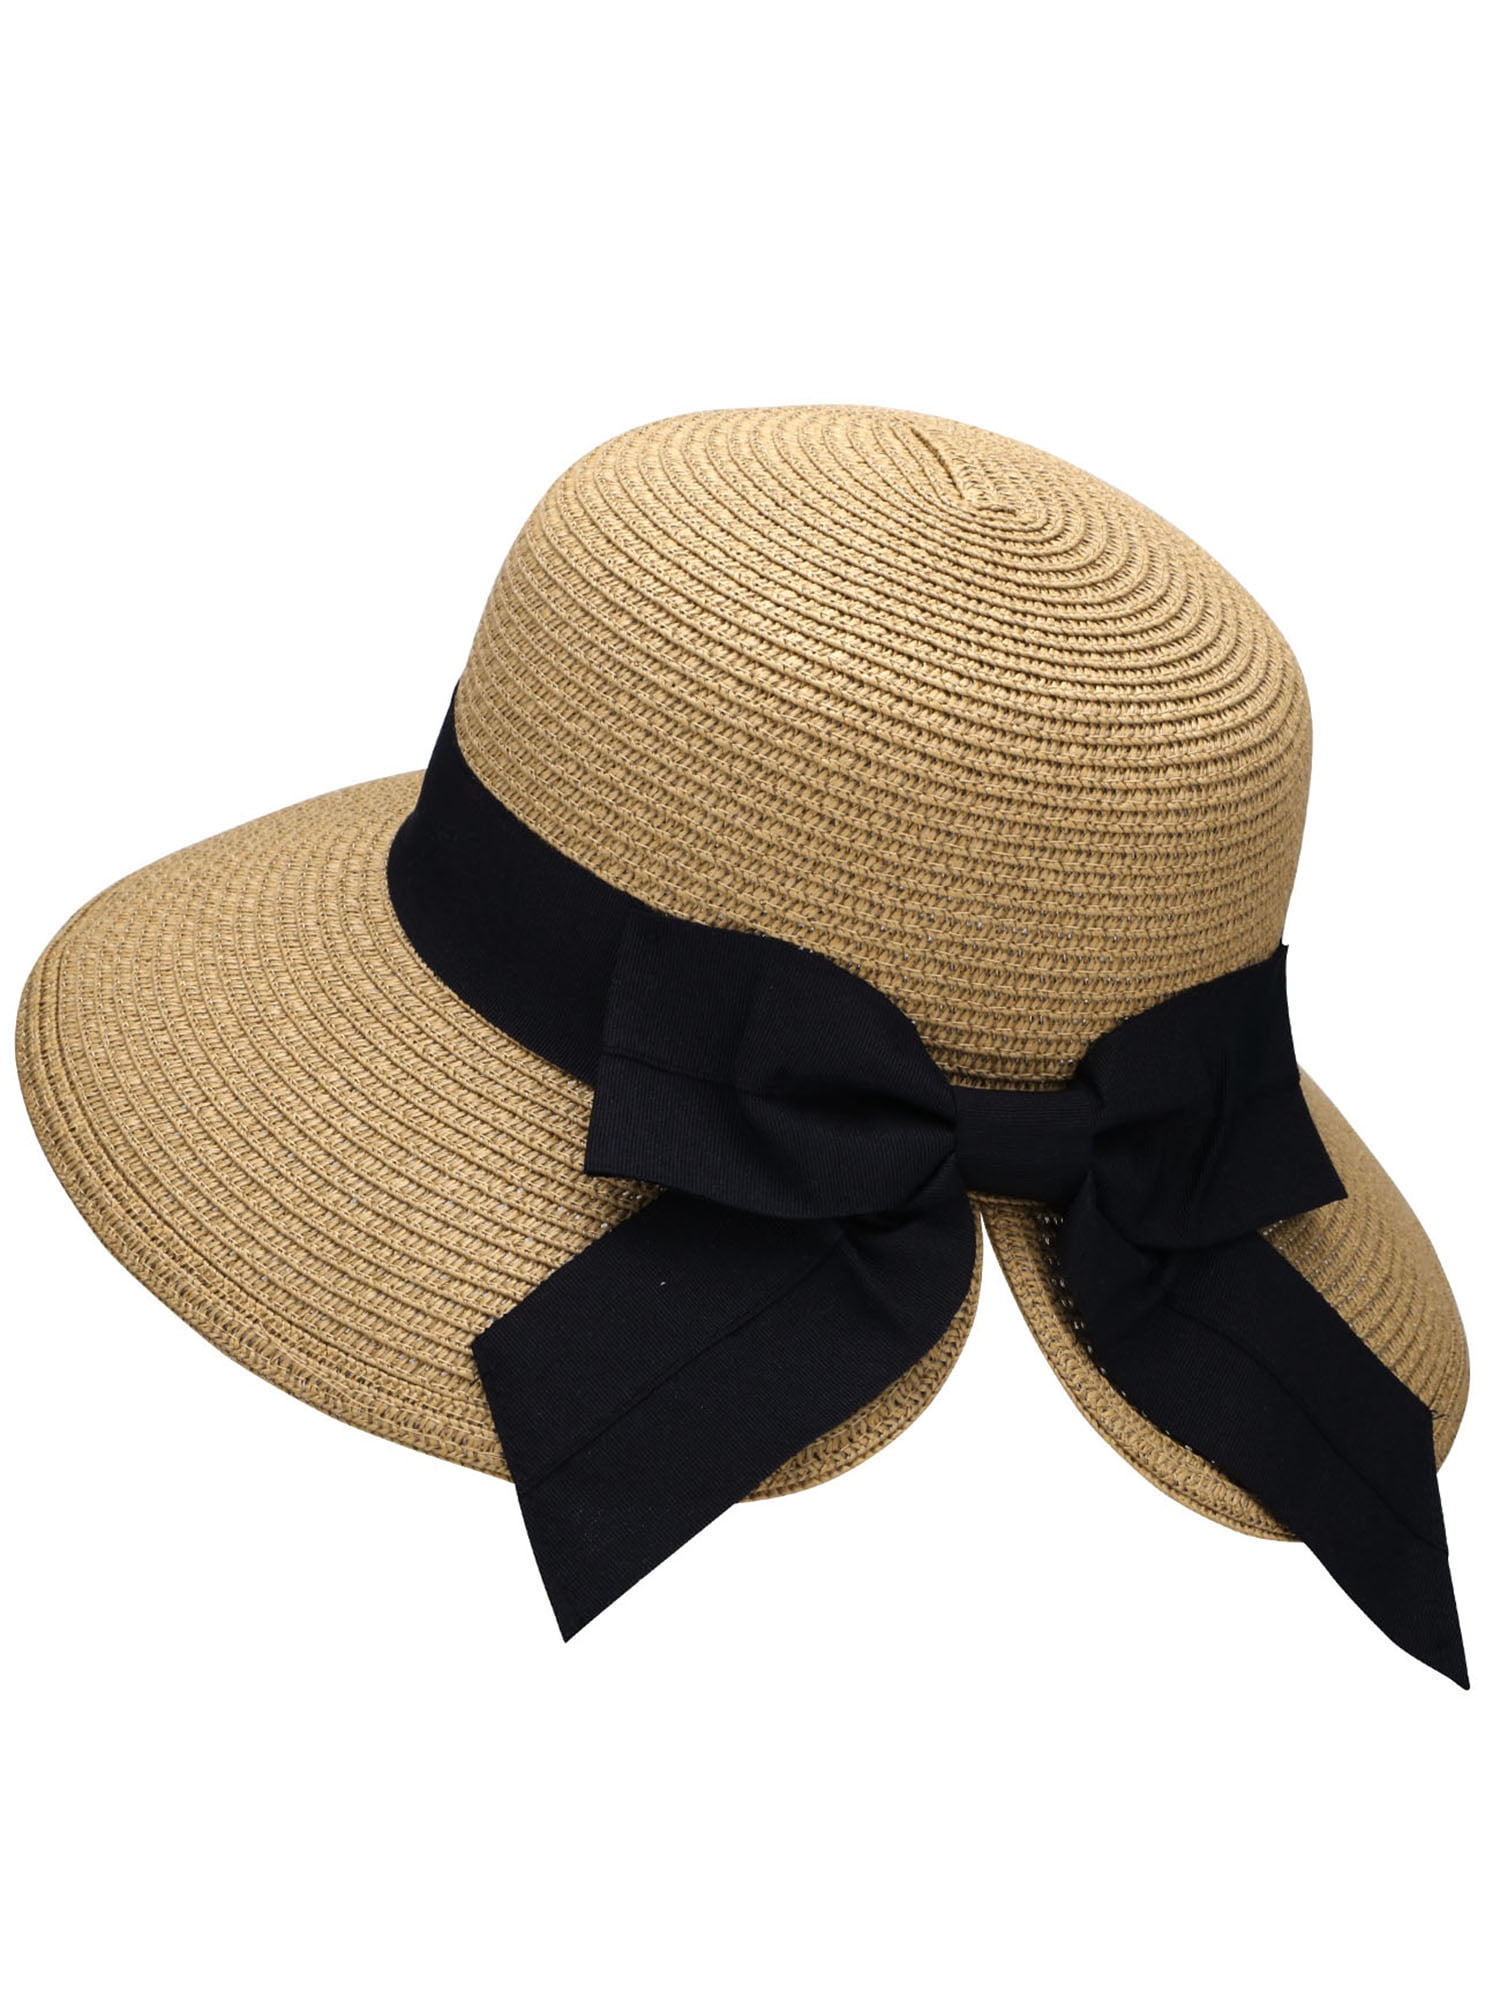 TWGONE Womens Sun Hat Floppy Foldable Ladies Women Maple Leaf Straw Beach Summer Hat Cap